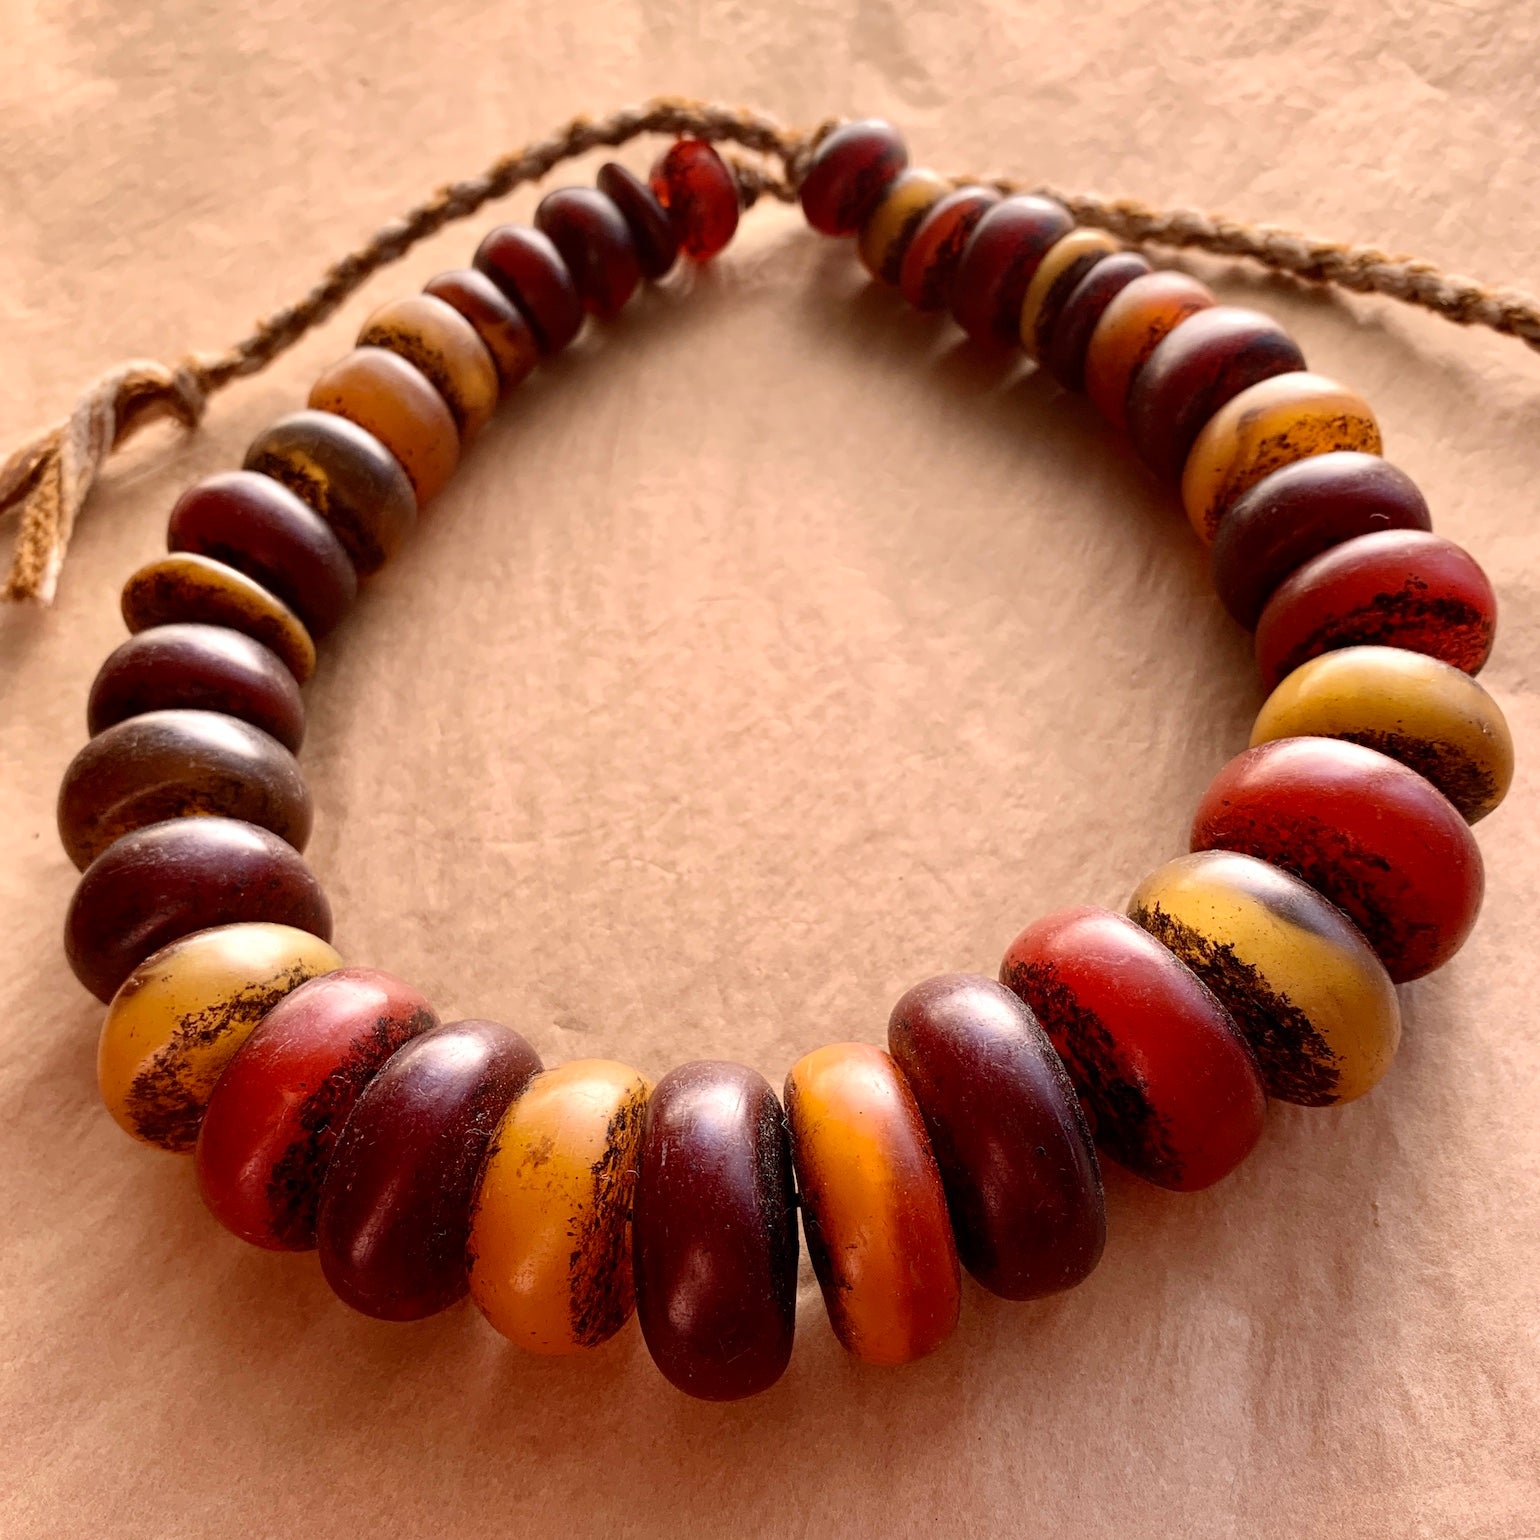 Dark Cherry Resin Beads with Copper Discs Earrings